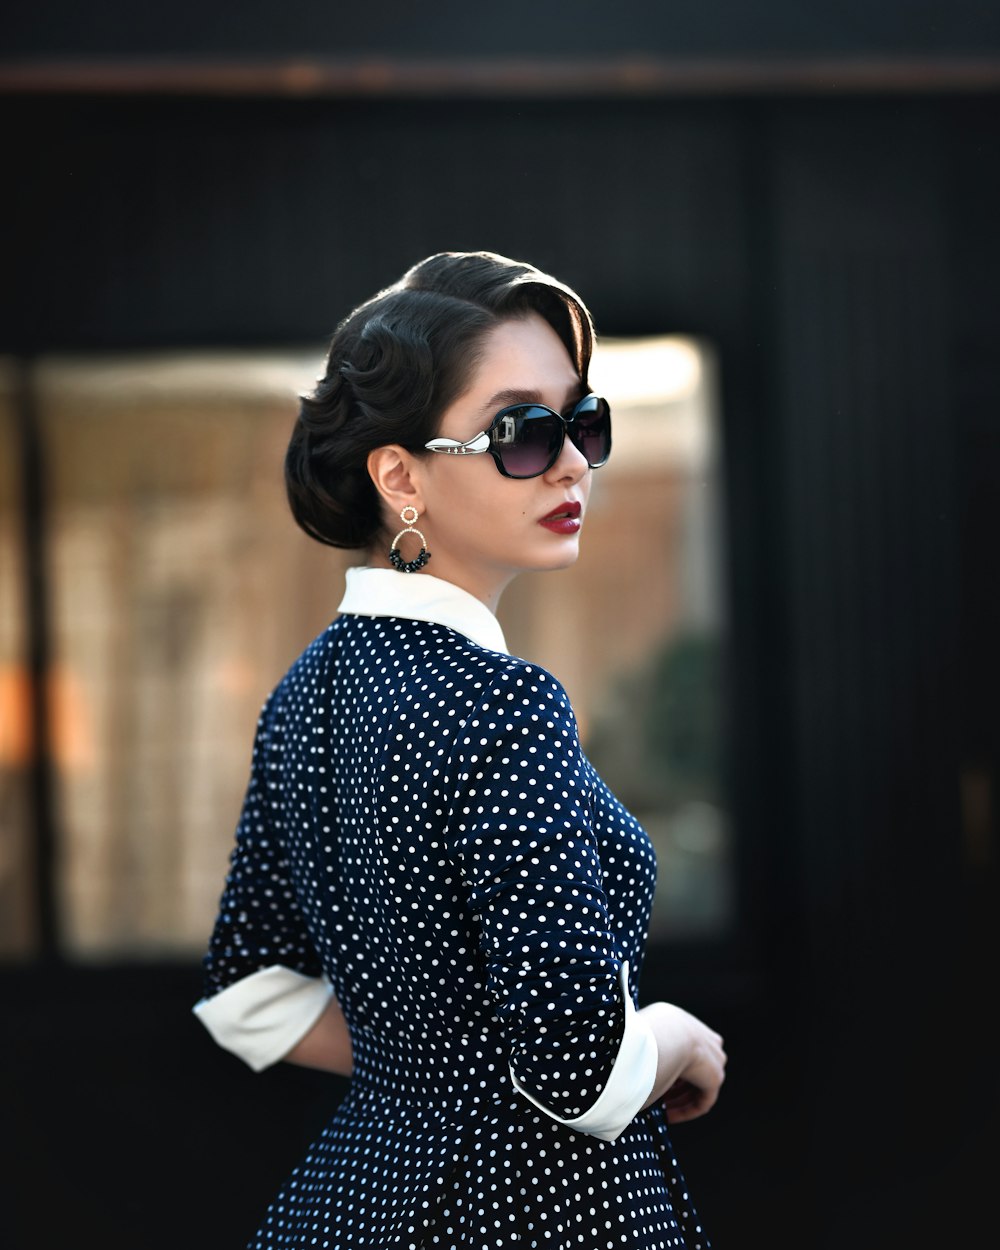 a woman wearing sunglasses and a polka dot dress